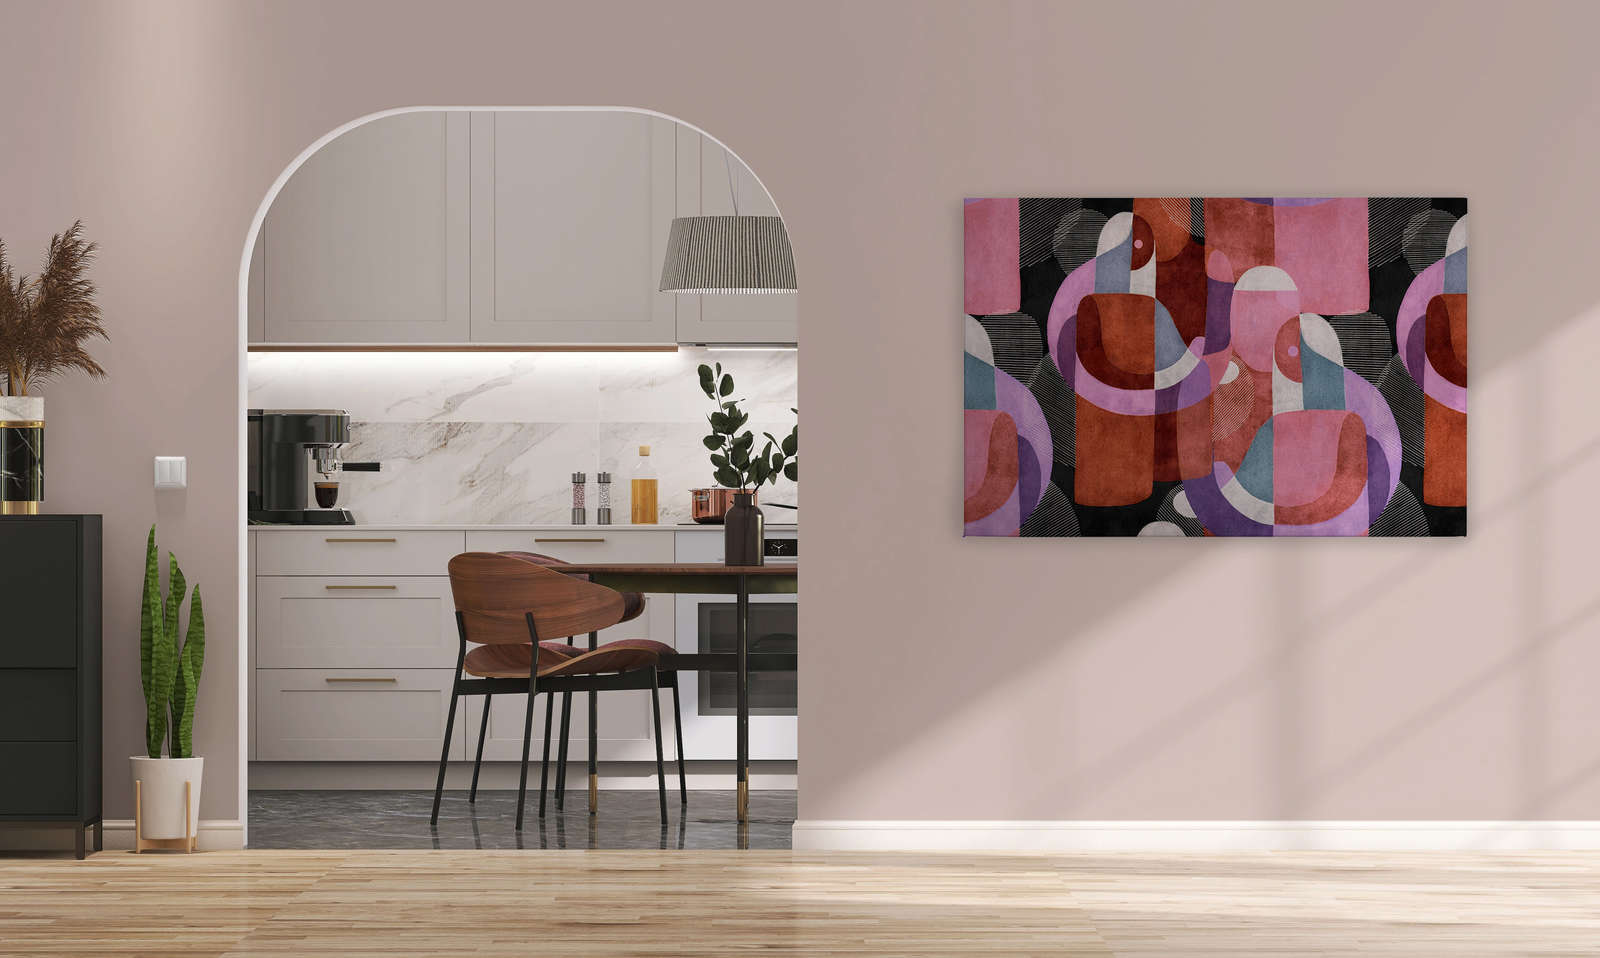             Meeting Place 2 - Canvas schilderij abstract etno design in zwart & roze - 1,20 m x 0,80 m
        